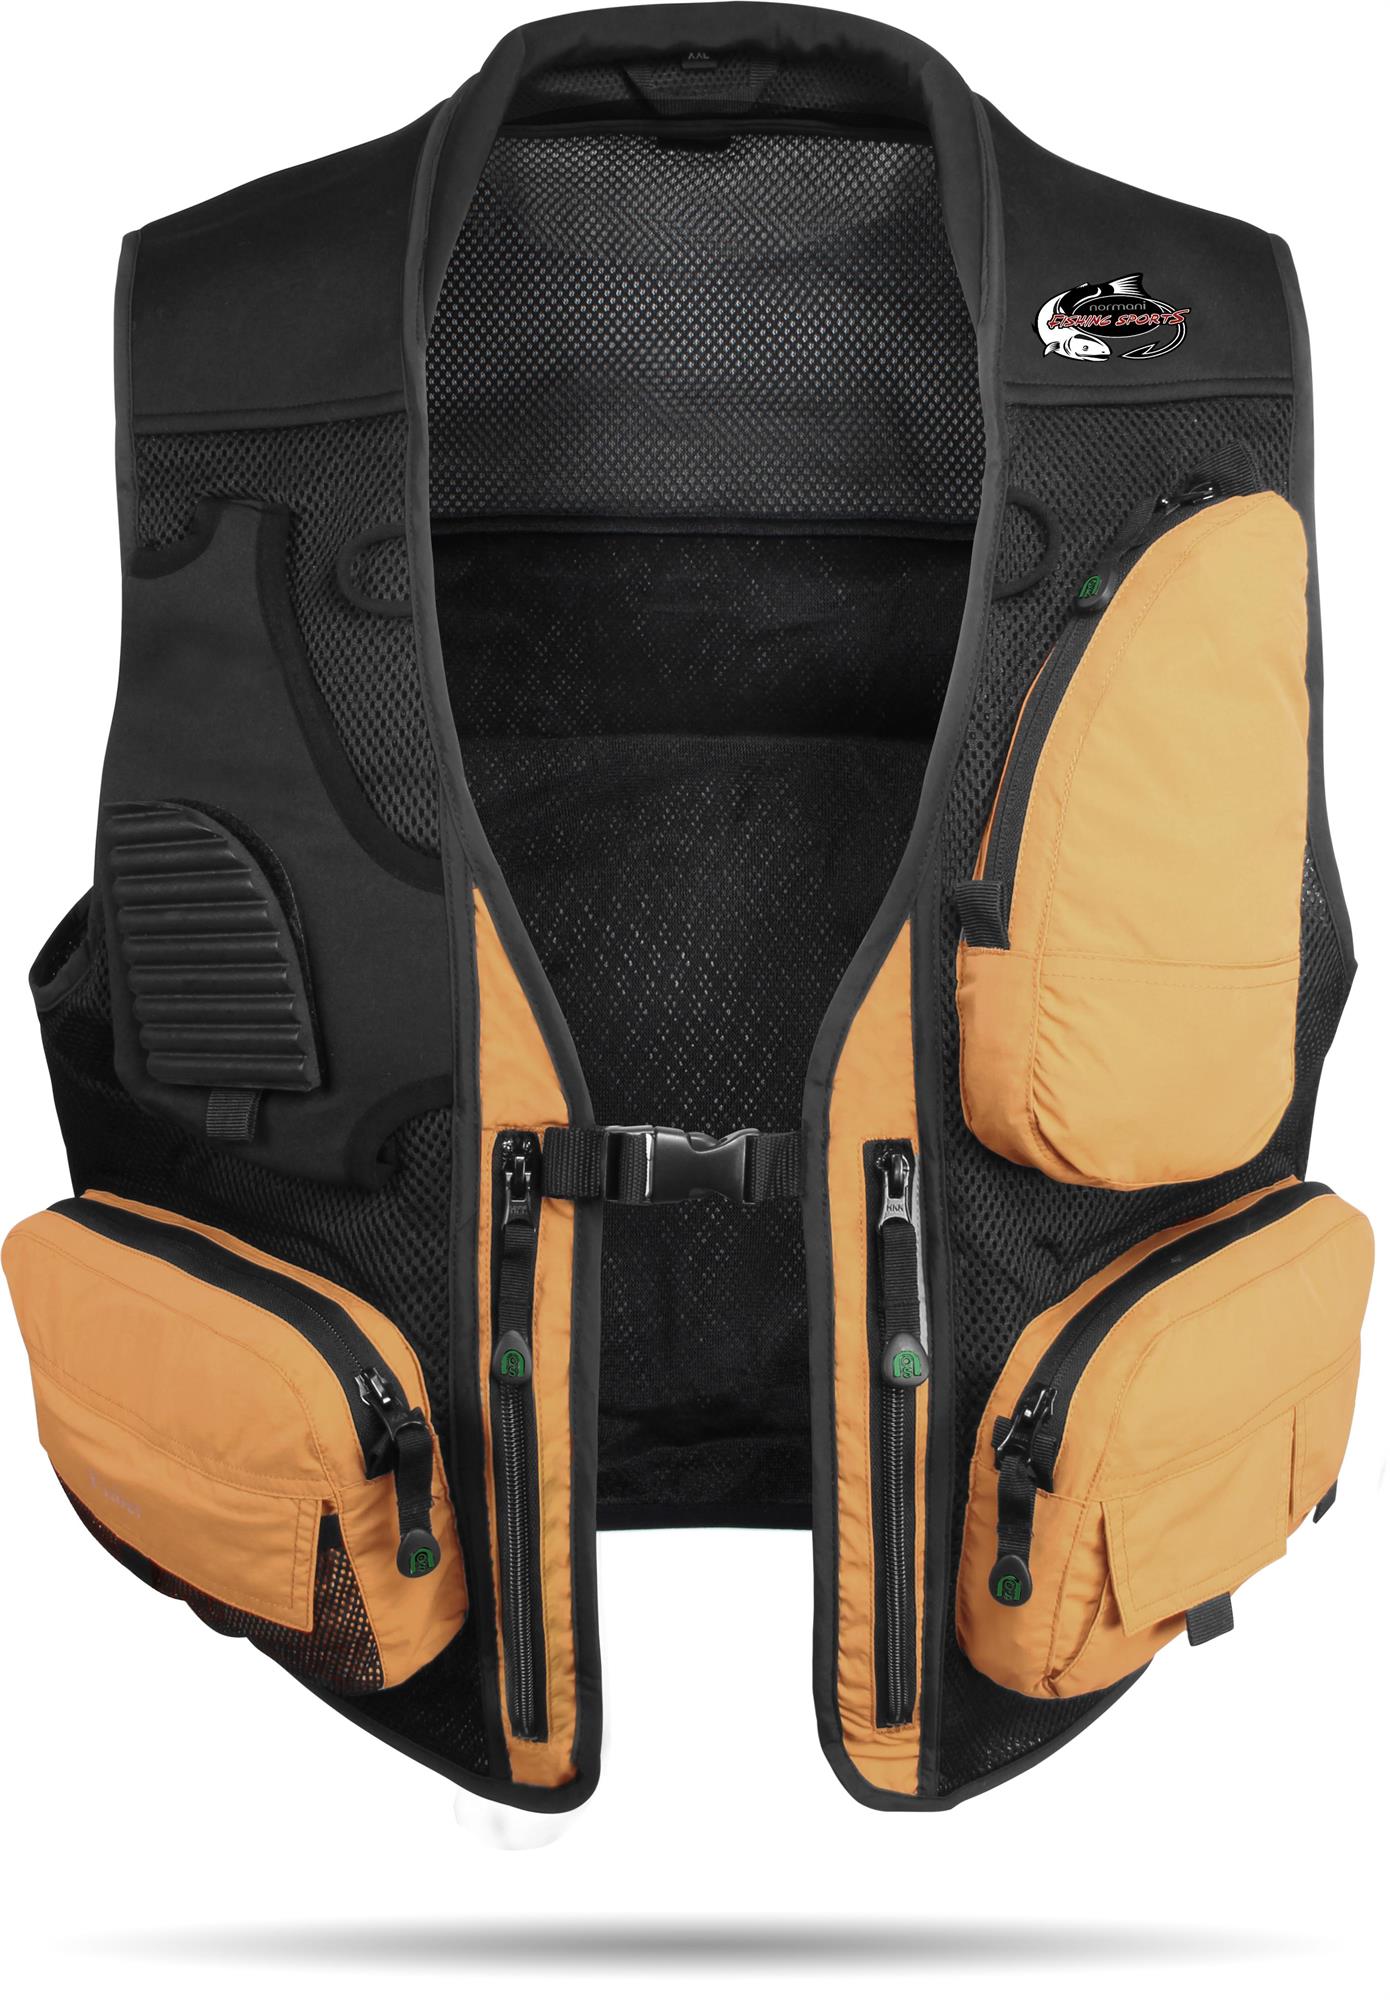 Anglerweste Multi-Pocket Jagd Fischer Outdoor Quick-Dry Fly-Patch Trekking Vest 